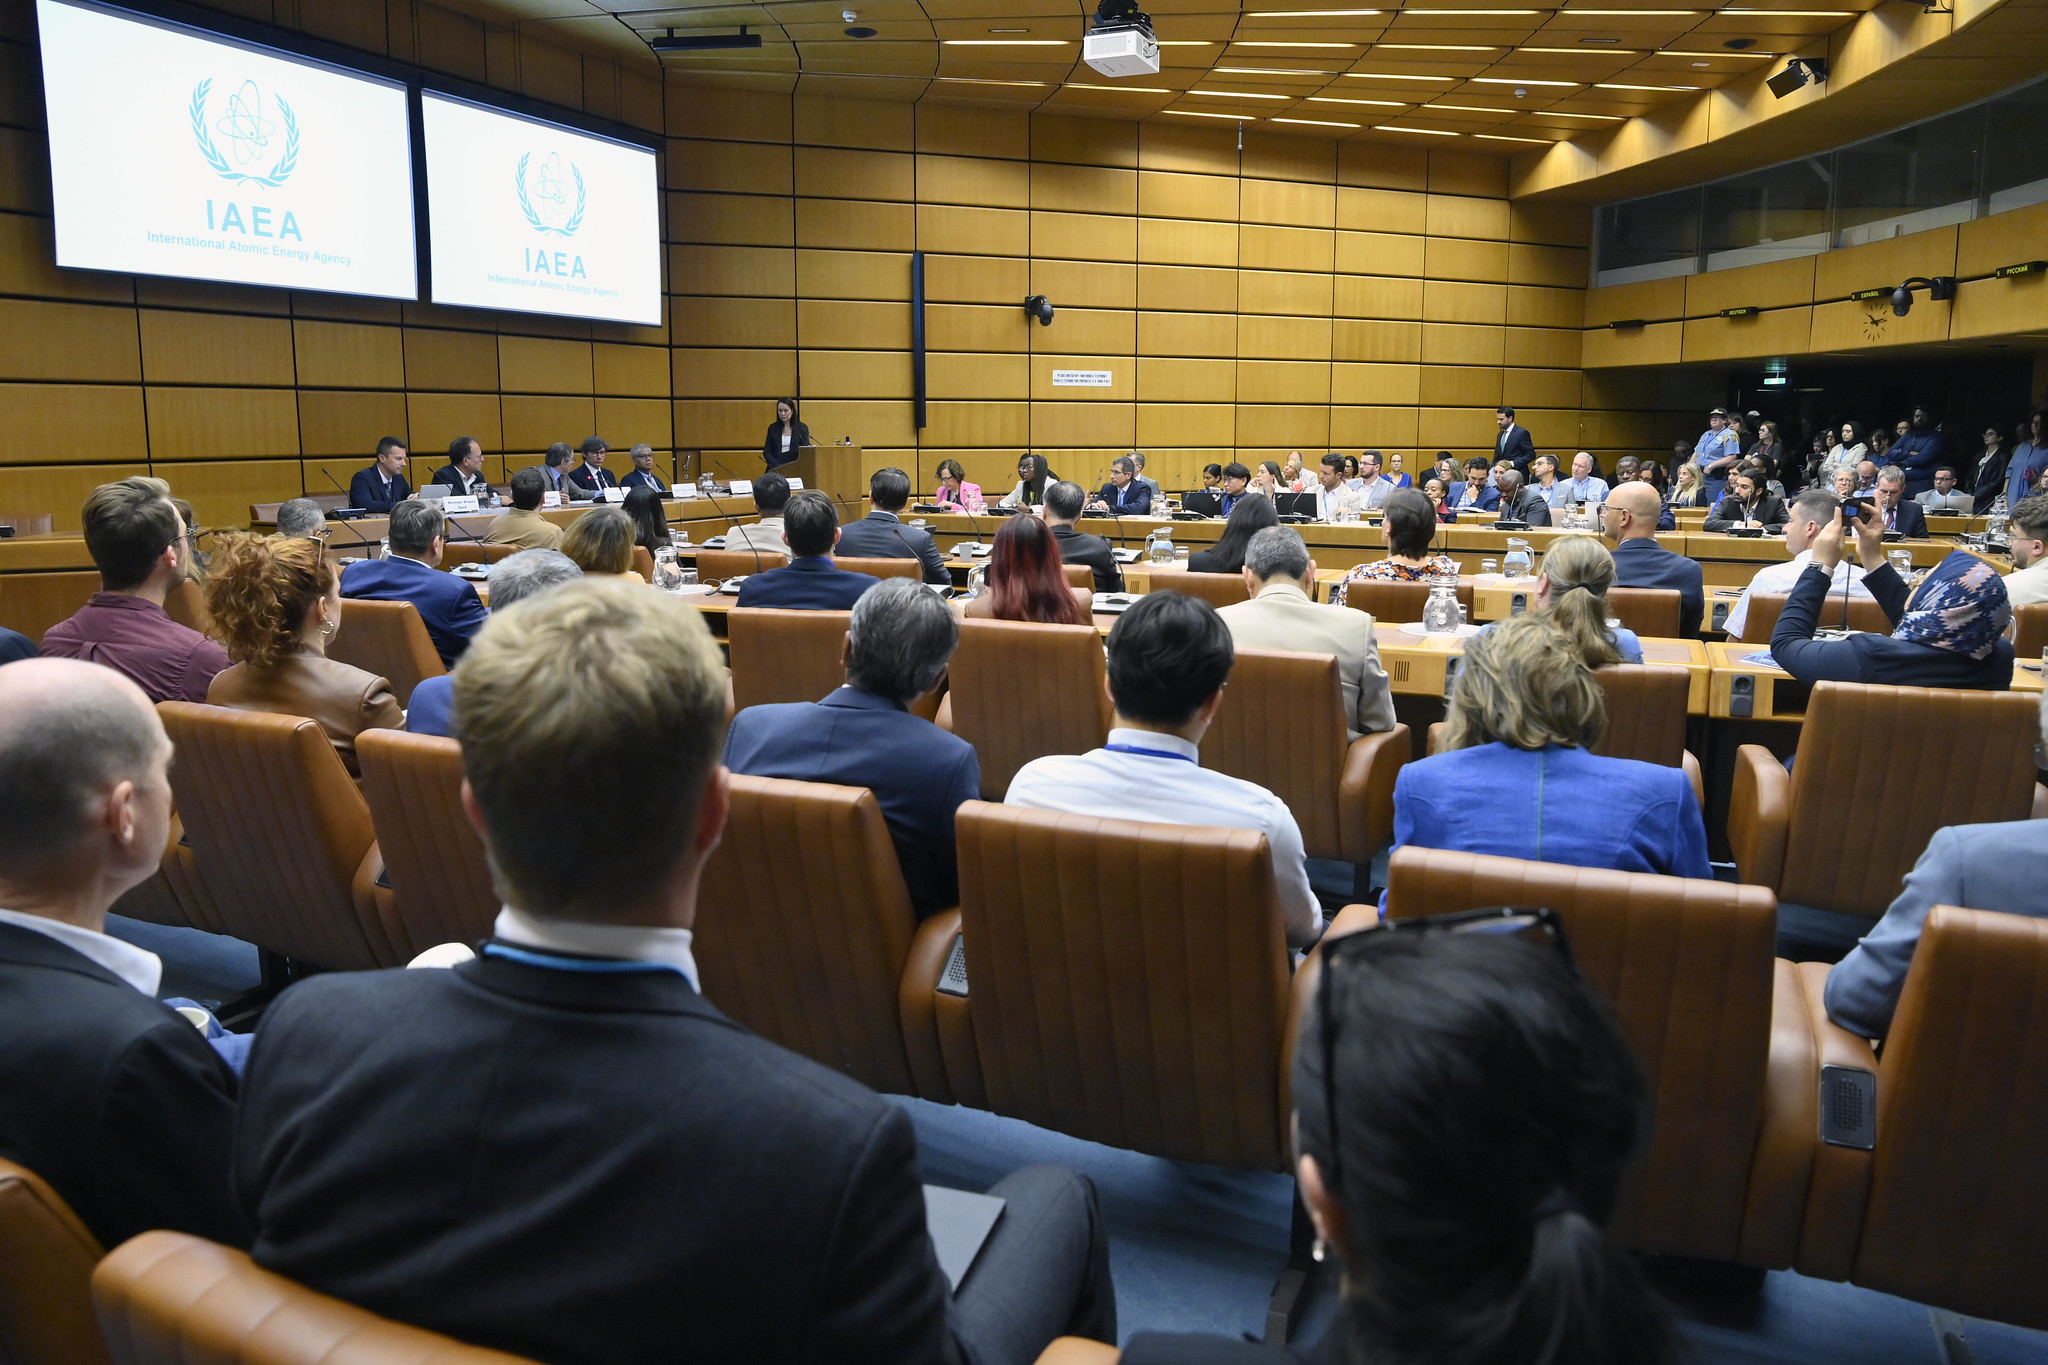 Tecnatom participates to the 67th IAEA General Conference in Vienna